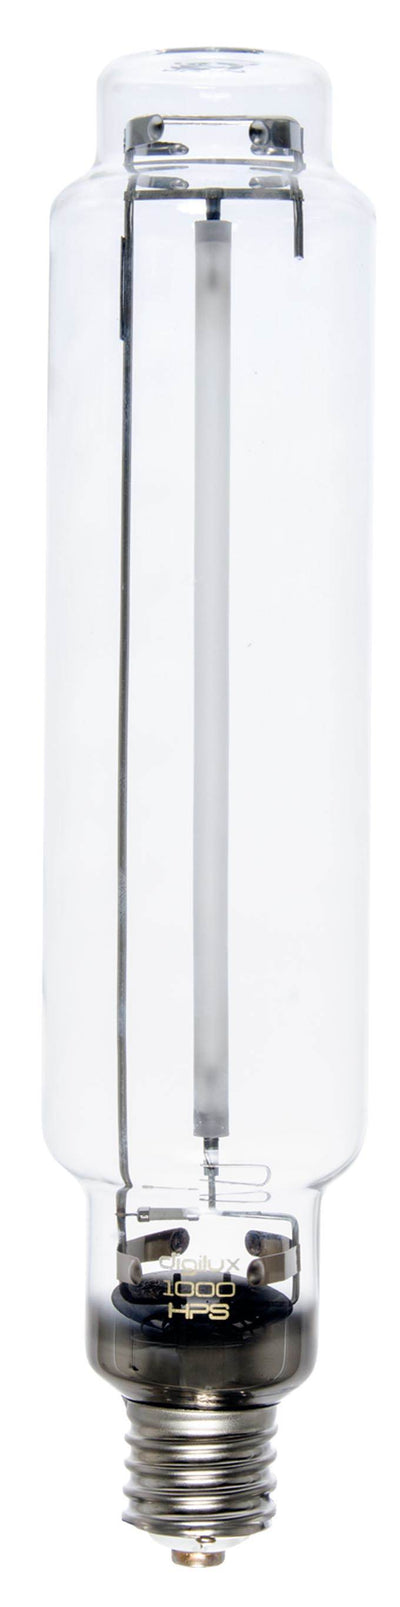 Digilux DX1000 1000 Watt HPS HID Sodium Digital Ballast Grow Lamp Light Bulb (6)